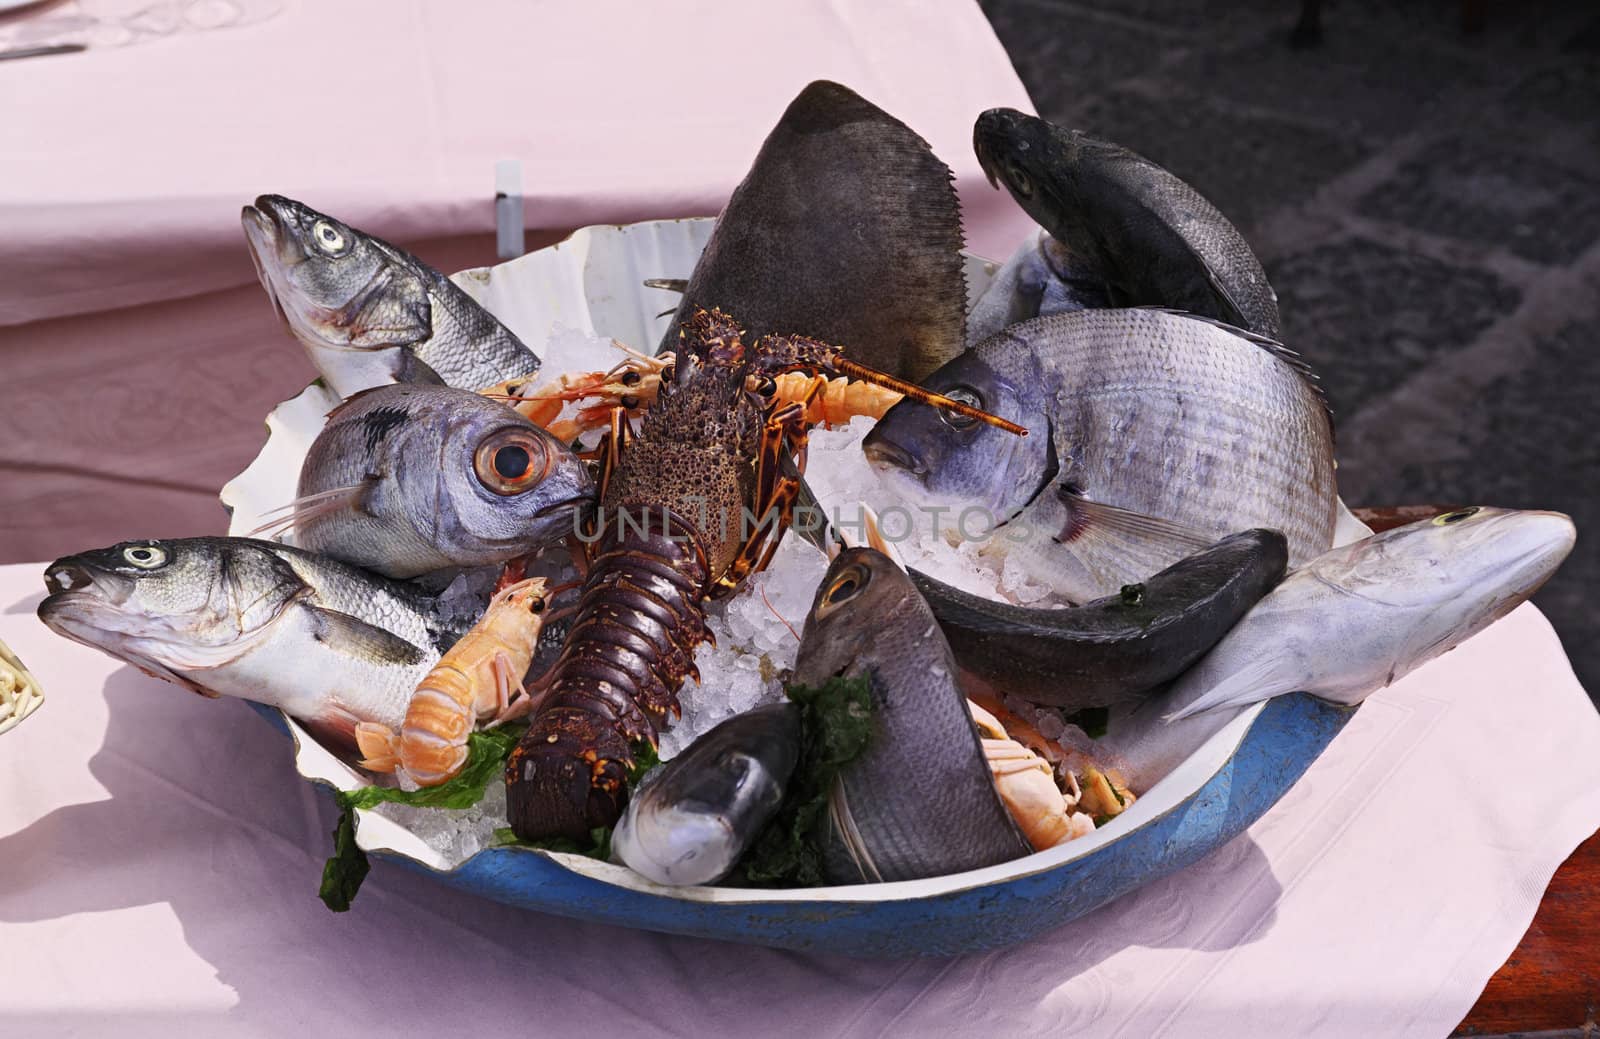 ITALY, Campania, Ischia island, Ischia Porto, mediterranean fresh fish exposed outside a restaurant